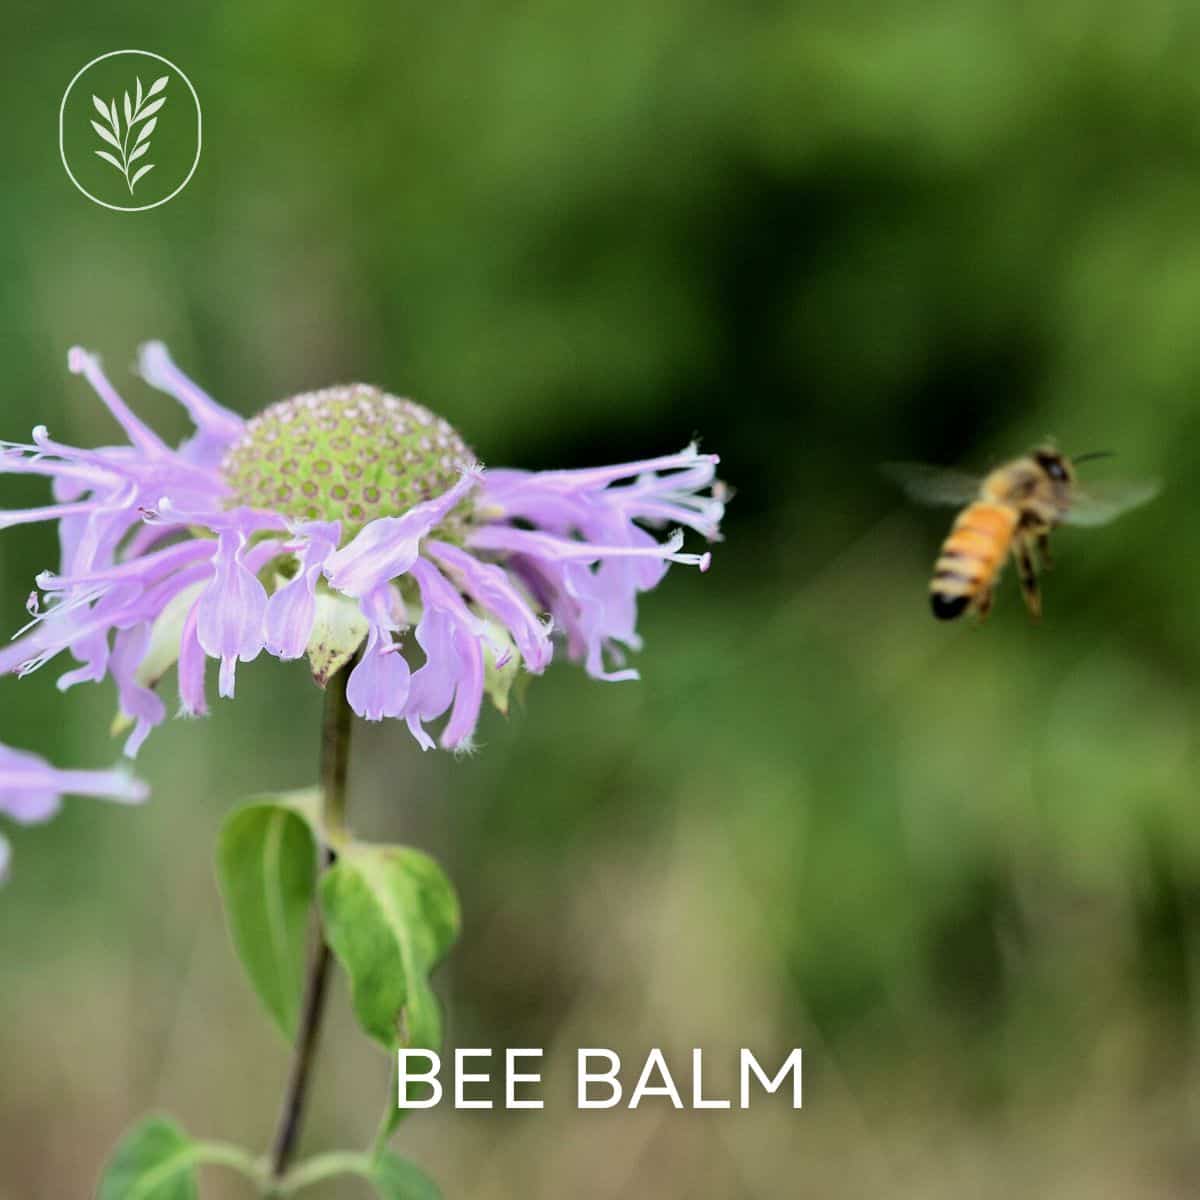 Bee balm via @home4theharvest